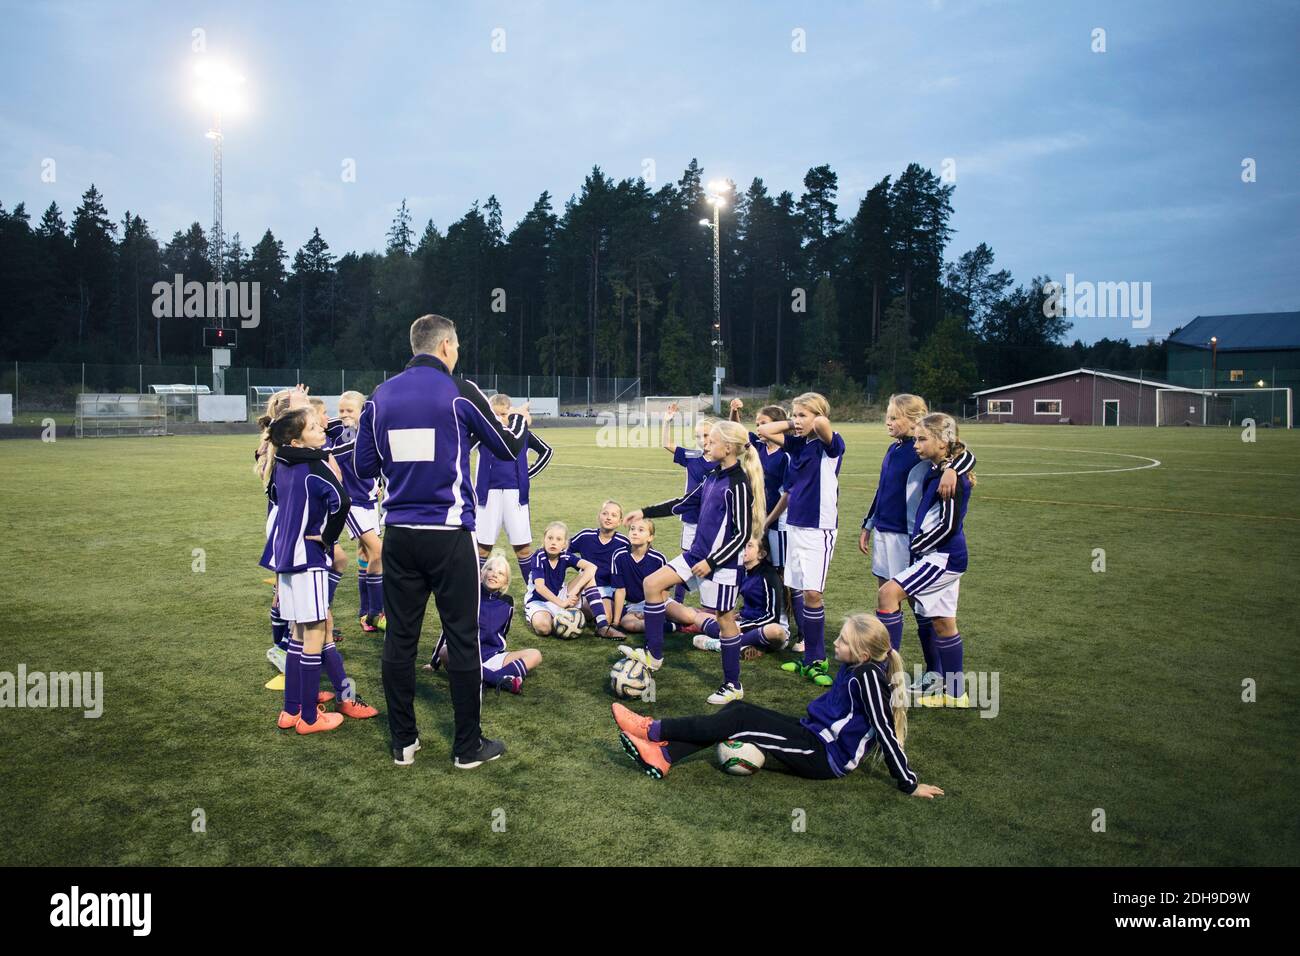 Coach explaining with girls soccer team on field against sky Stock Photo